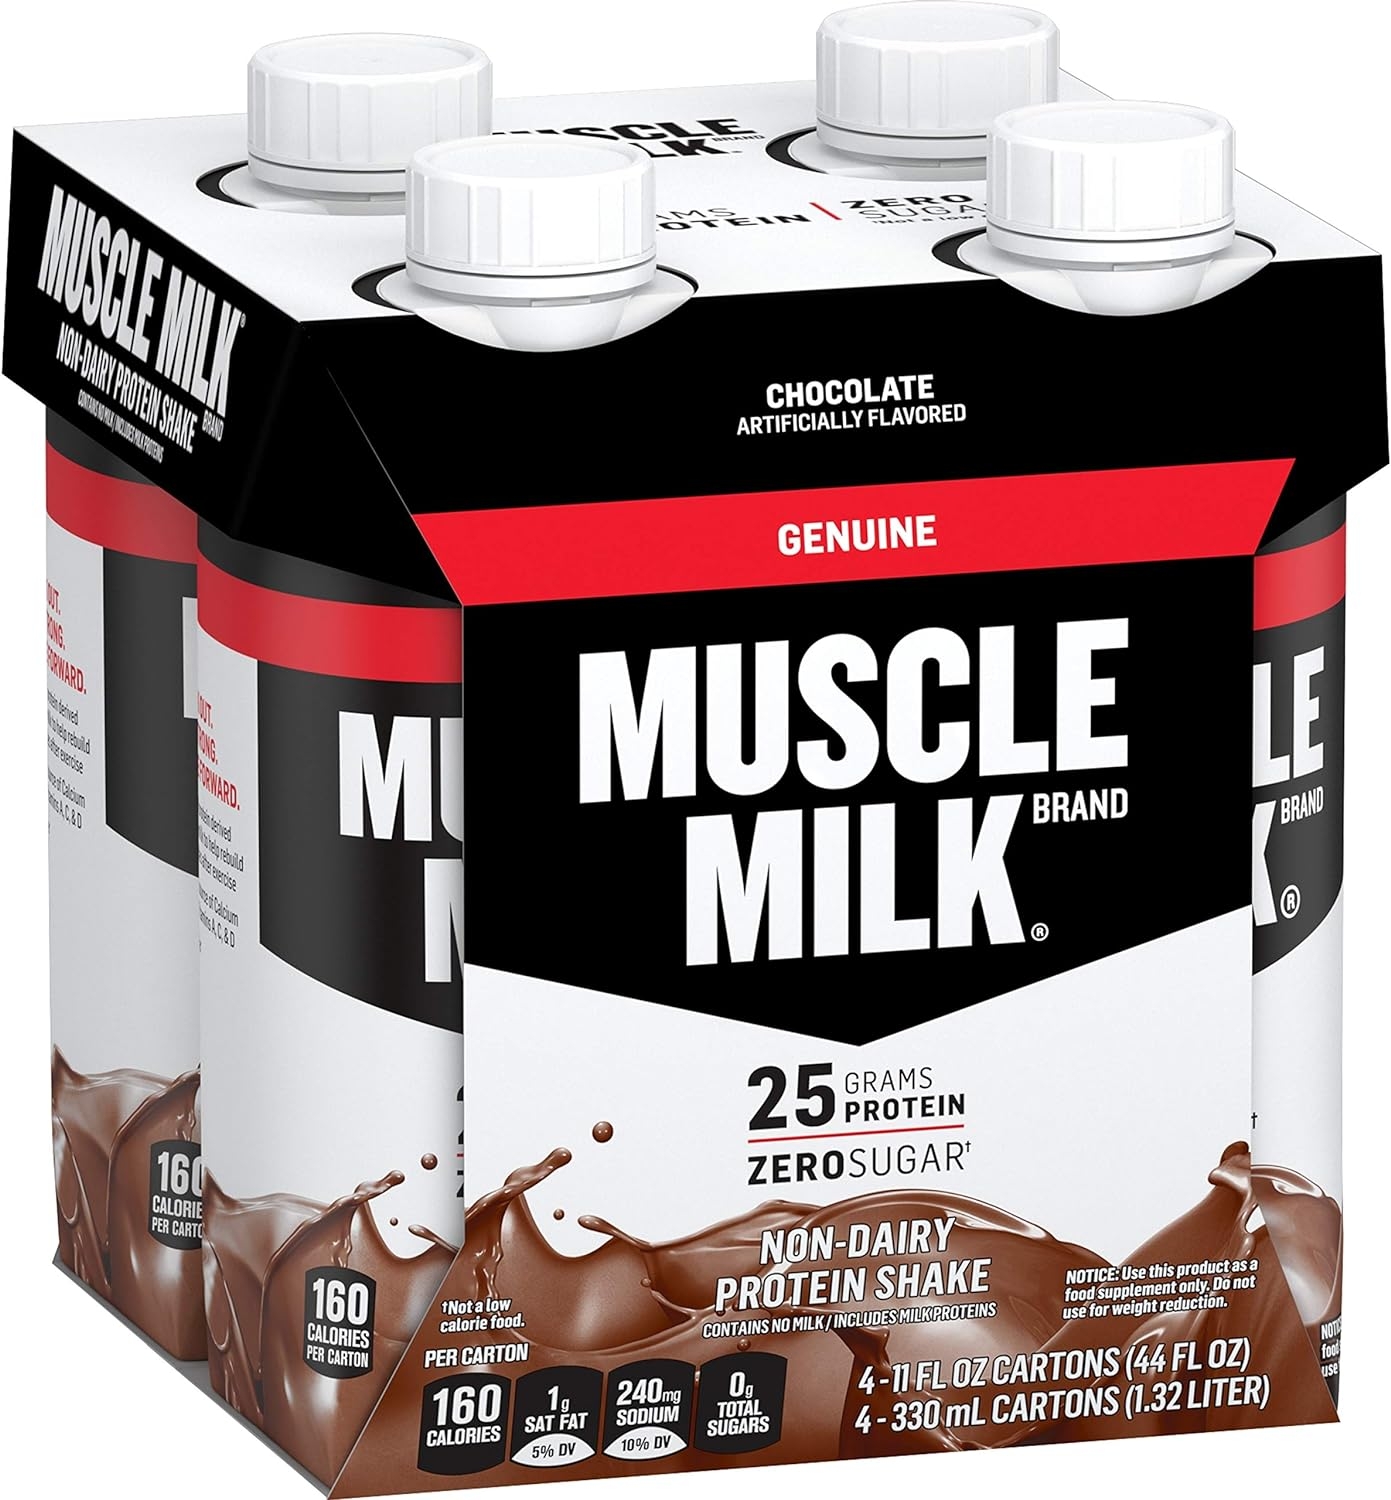 Muscle Milk Genuine Protein Shake, Chocolate, 25g Protein, 11 Fl Oz, 4 Pack